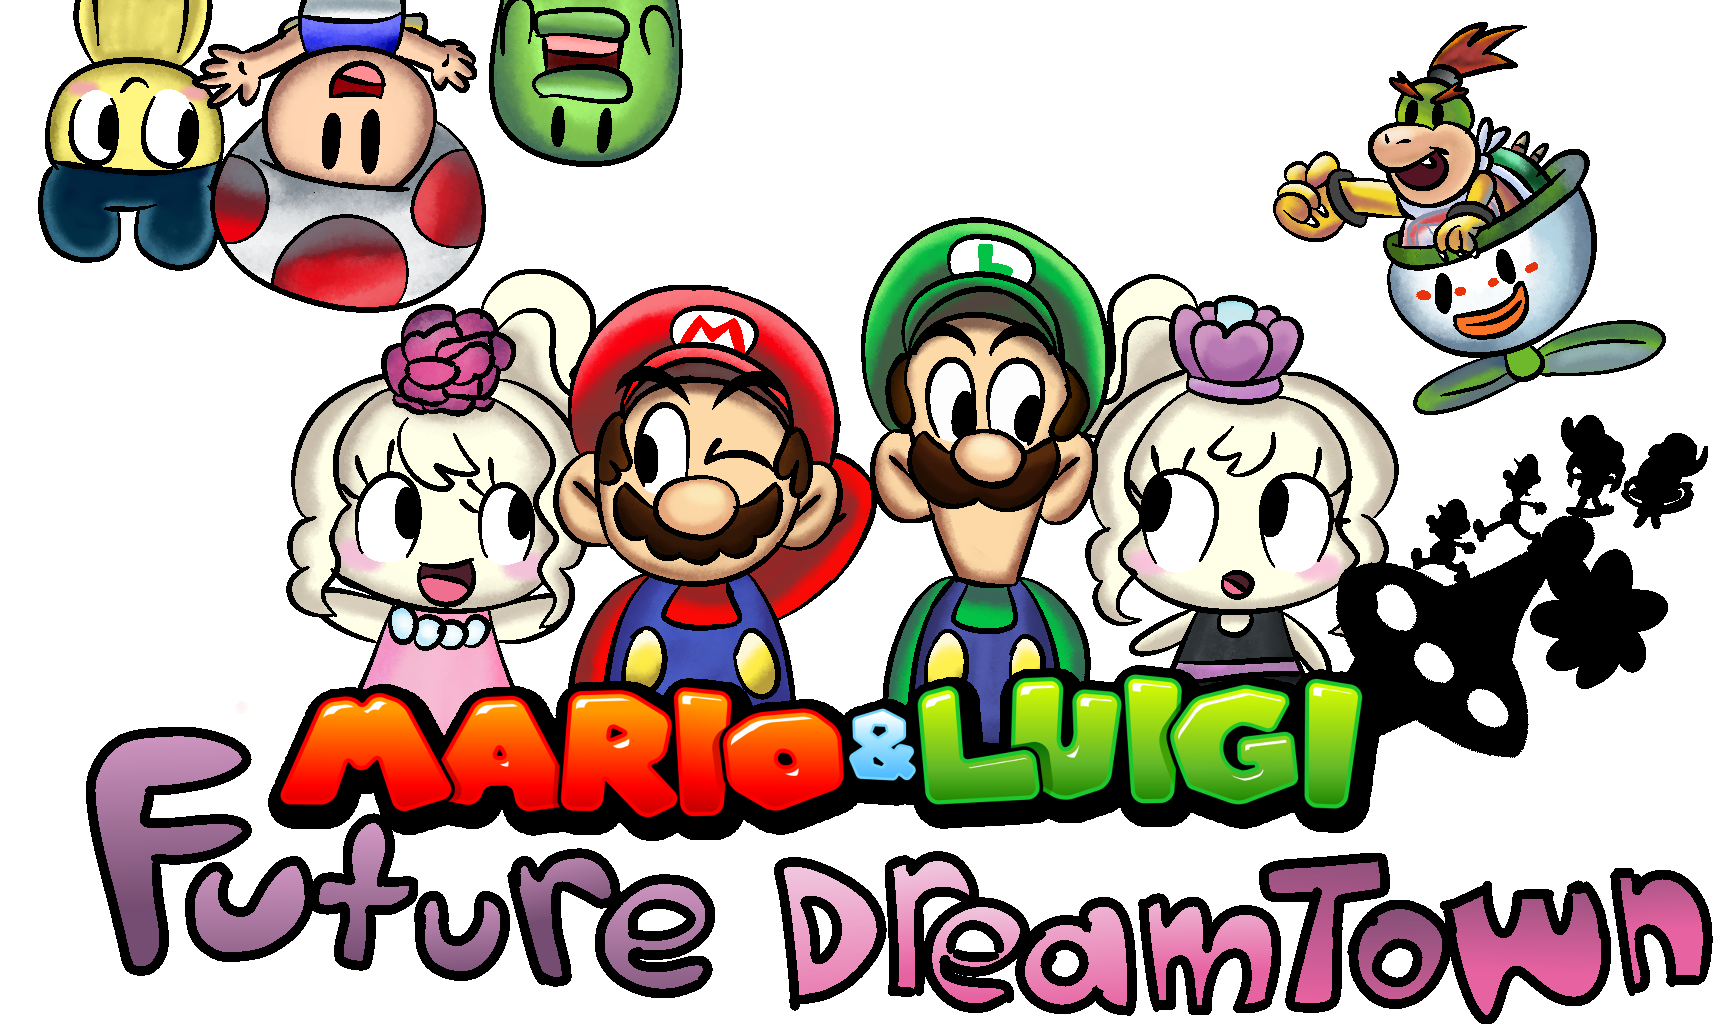 Detail Images Of Mario And Luigi Nomer 54